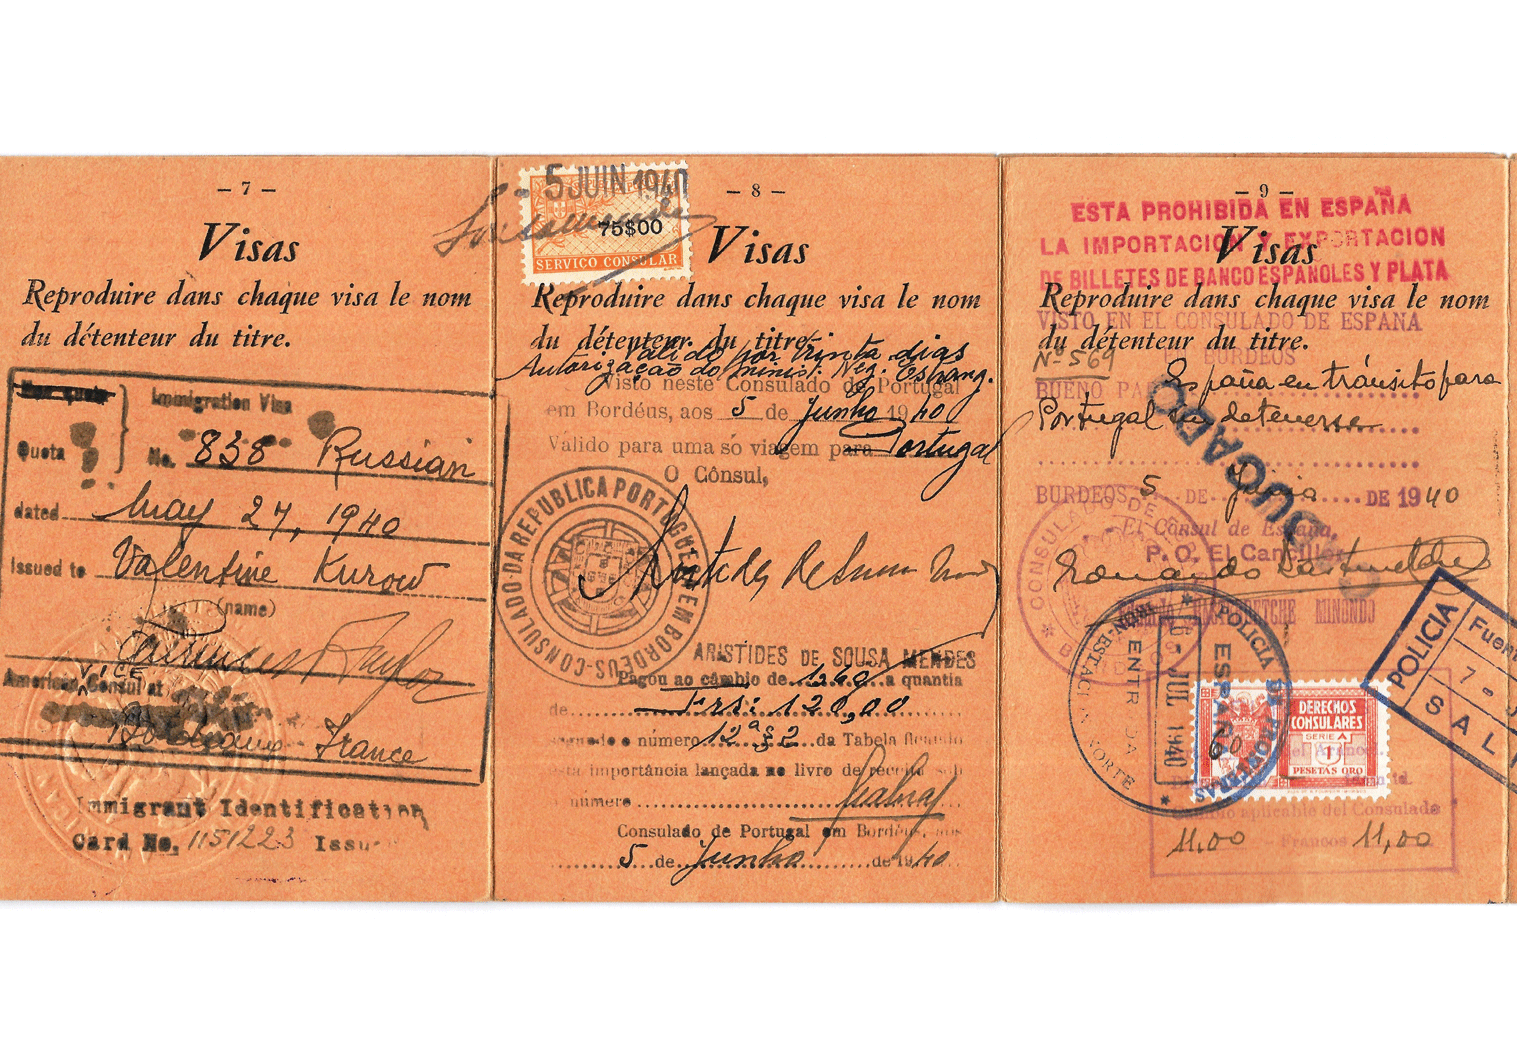 Nansen passport with life-saving visa by Aristides de Sousa Mendes